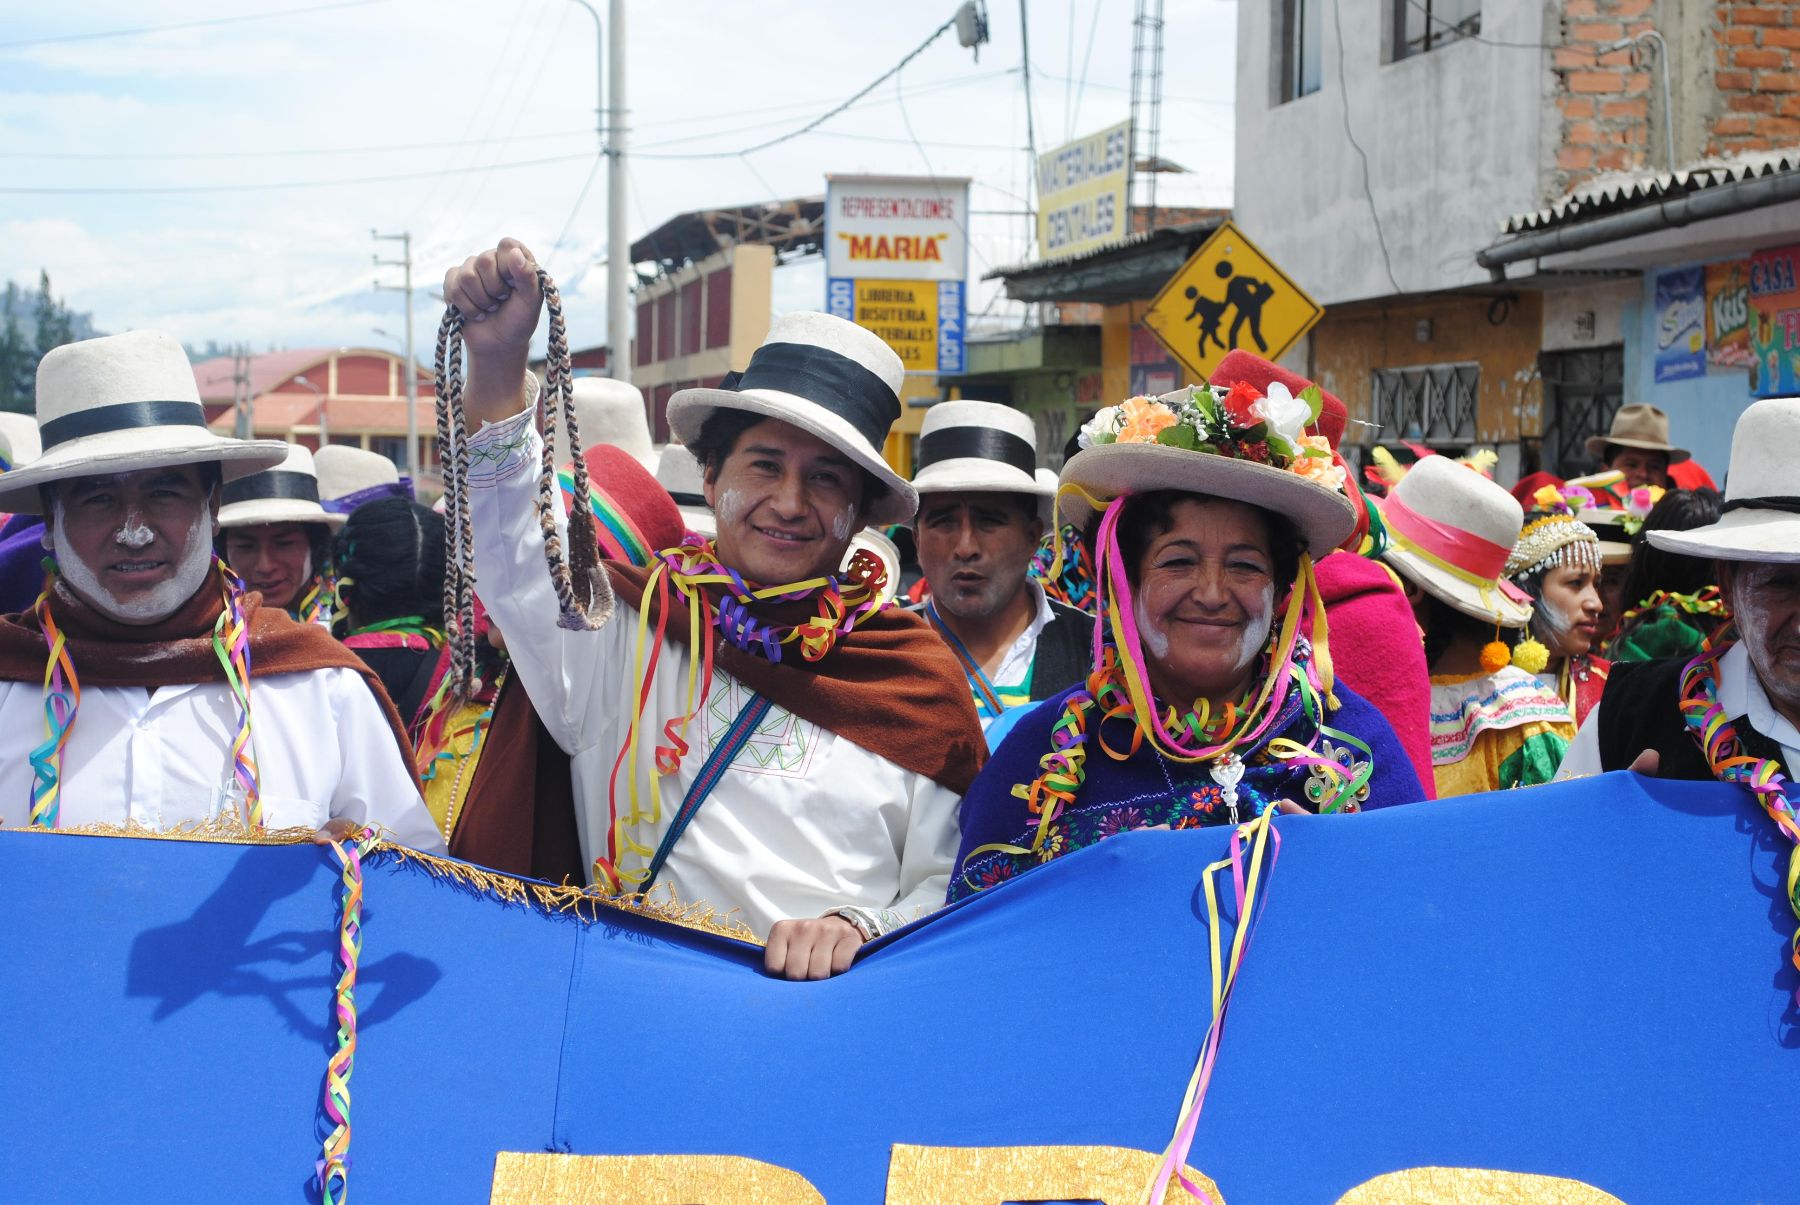 Carnaval Huaracino.